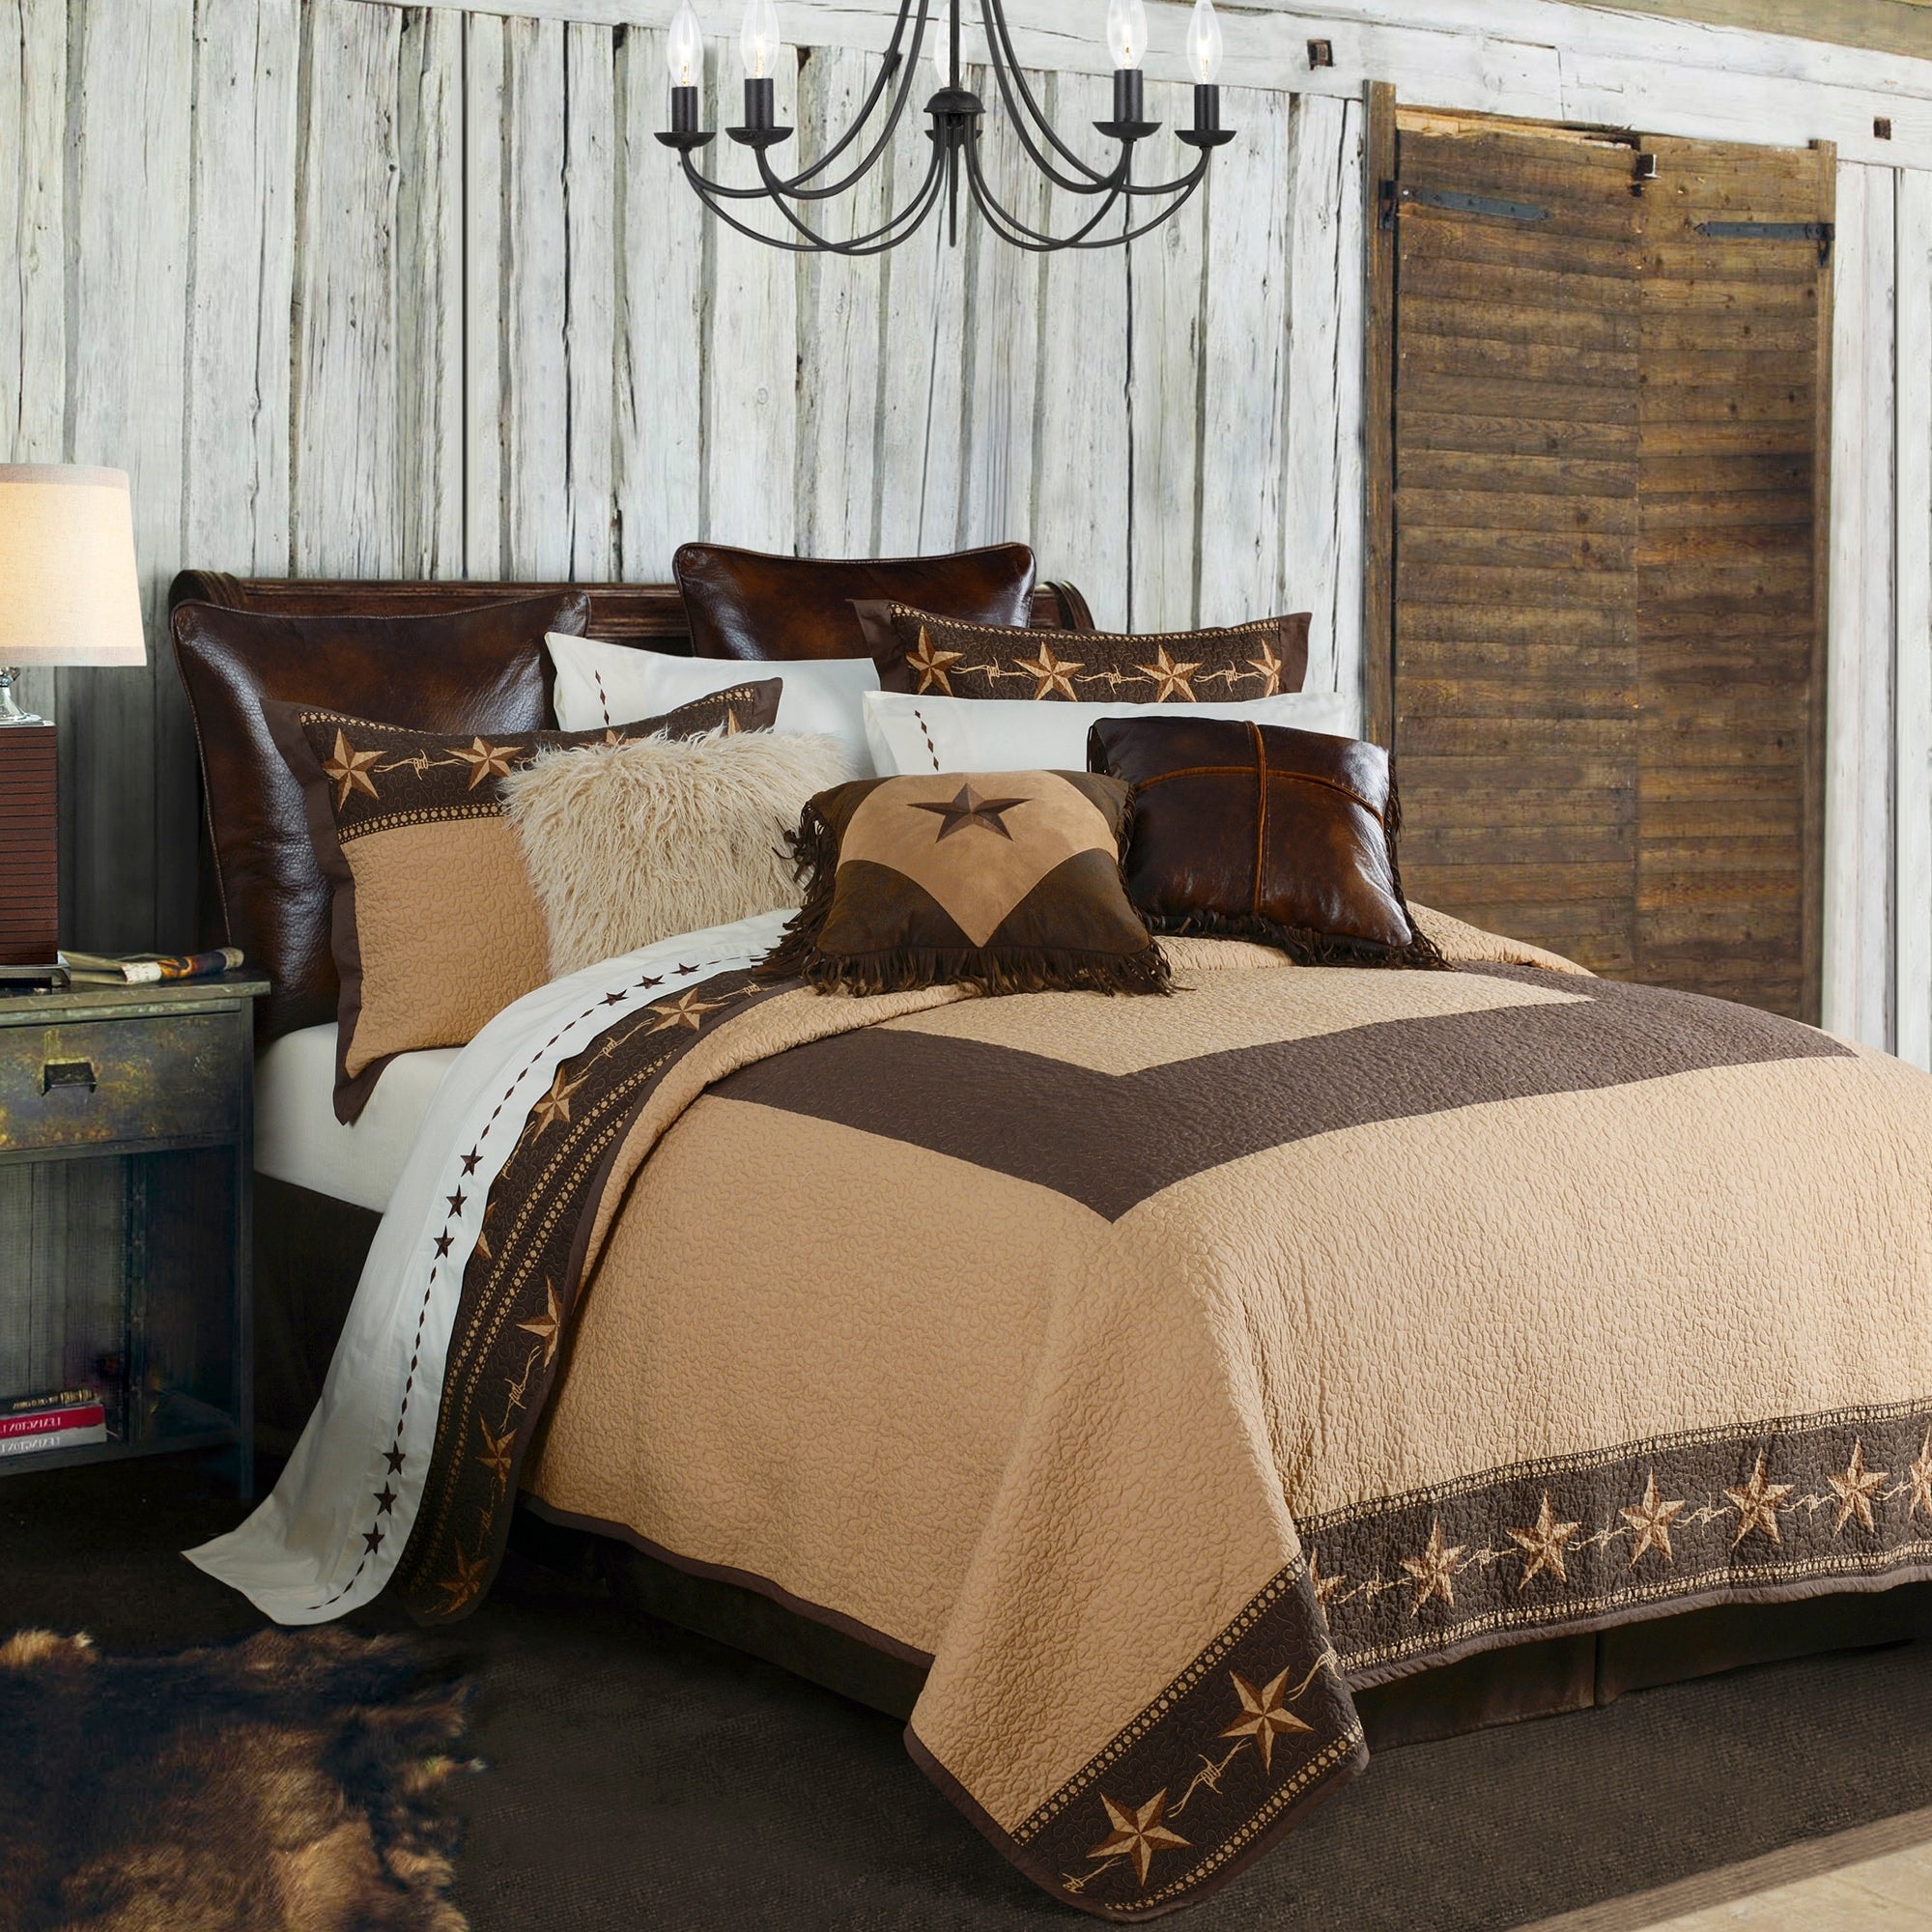 Lv type 197 lv luxury brand Bedding Sets blankets home decor